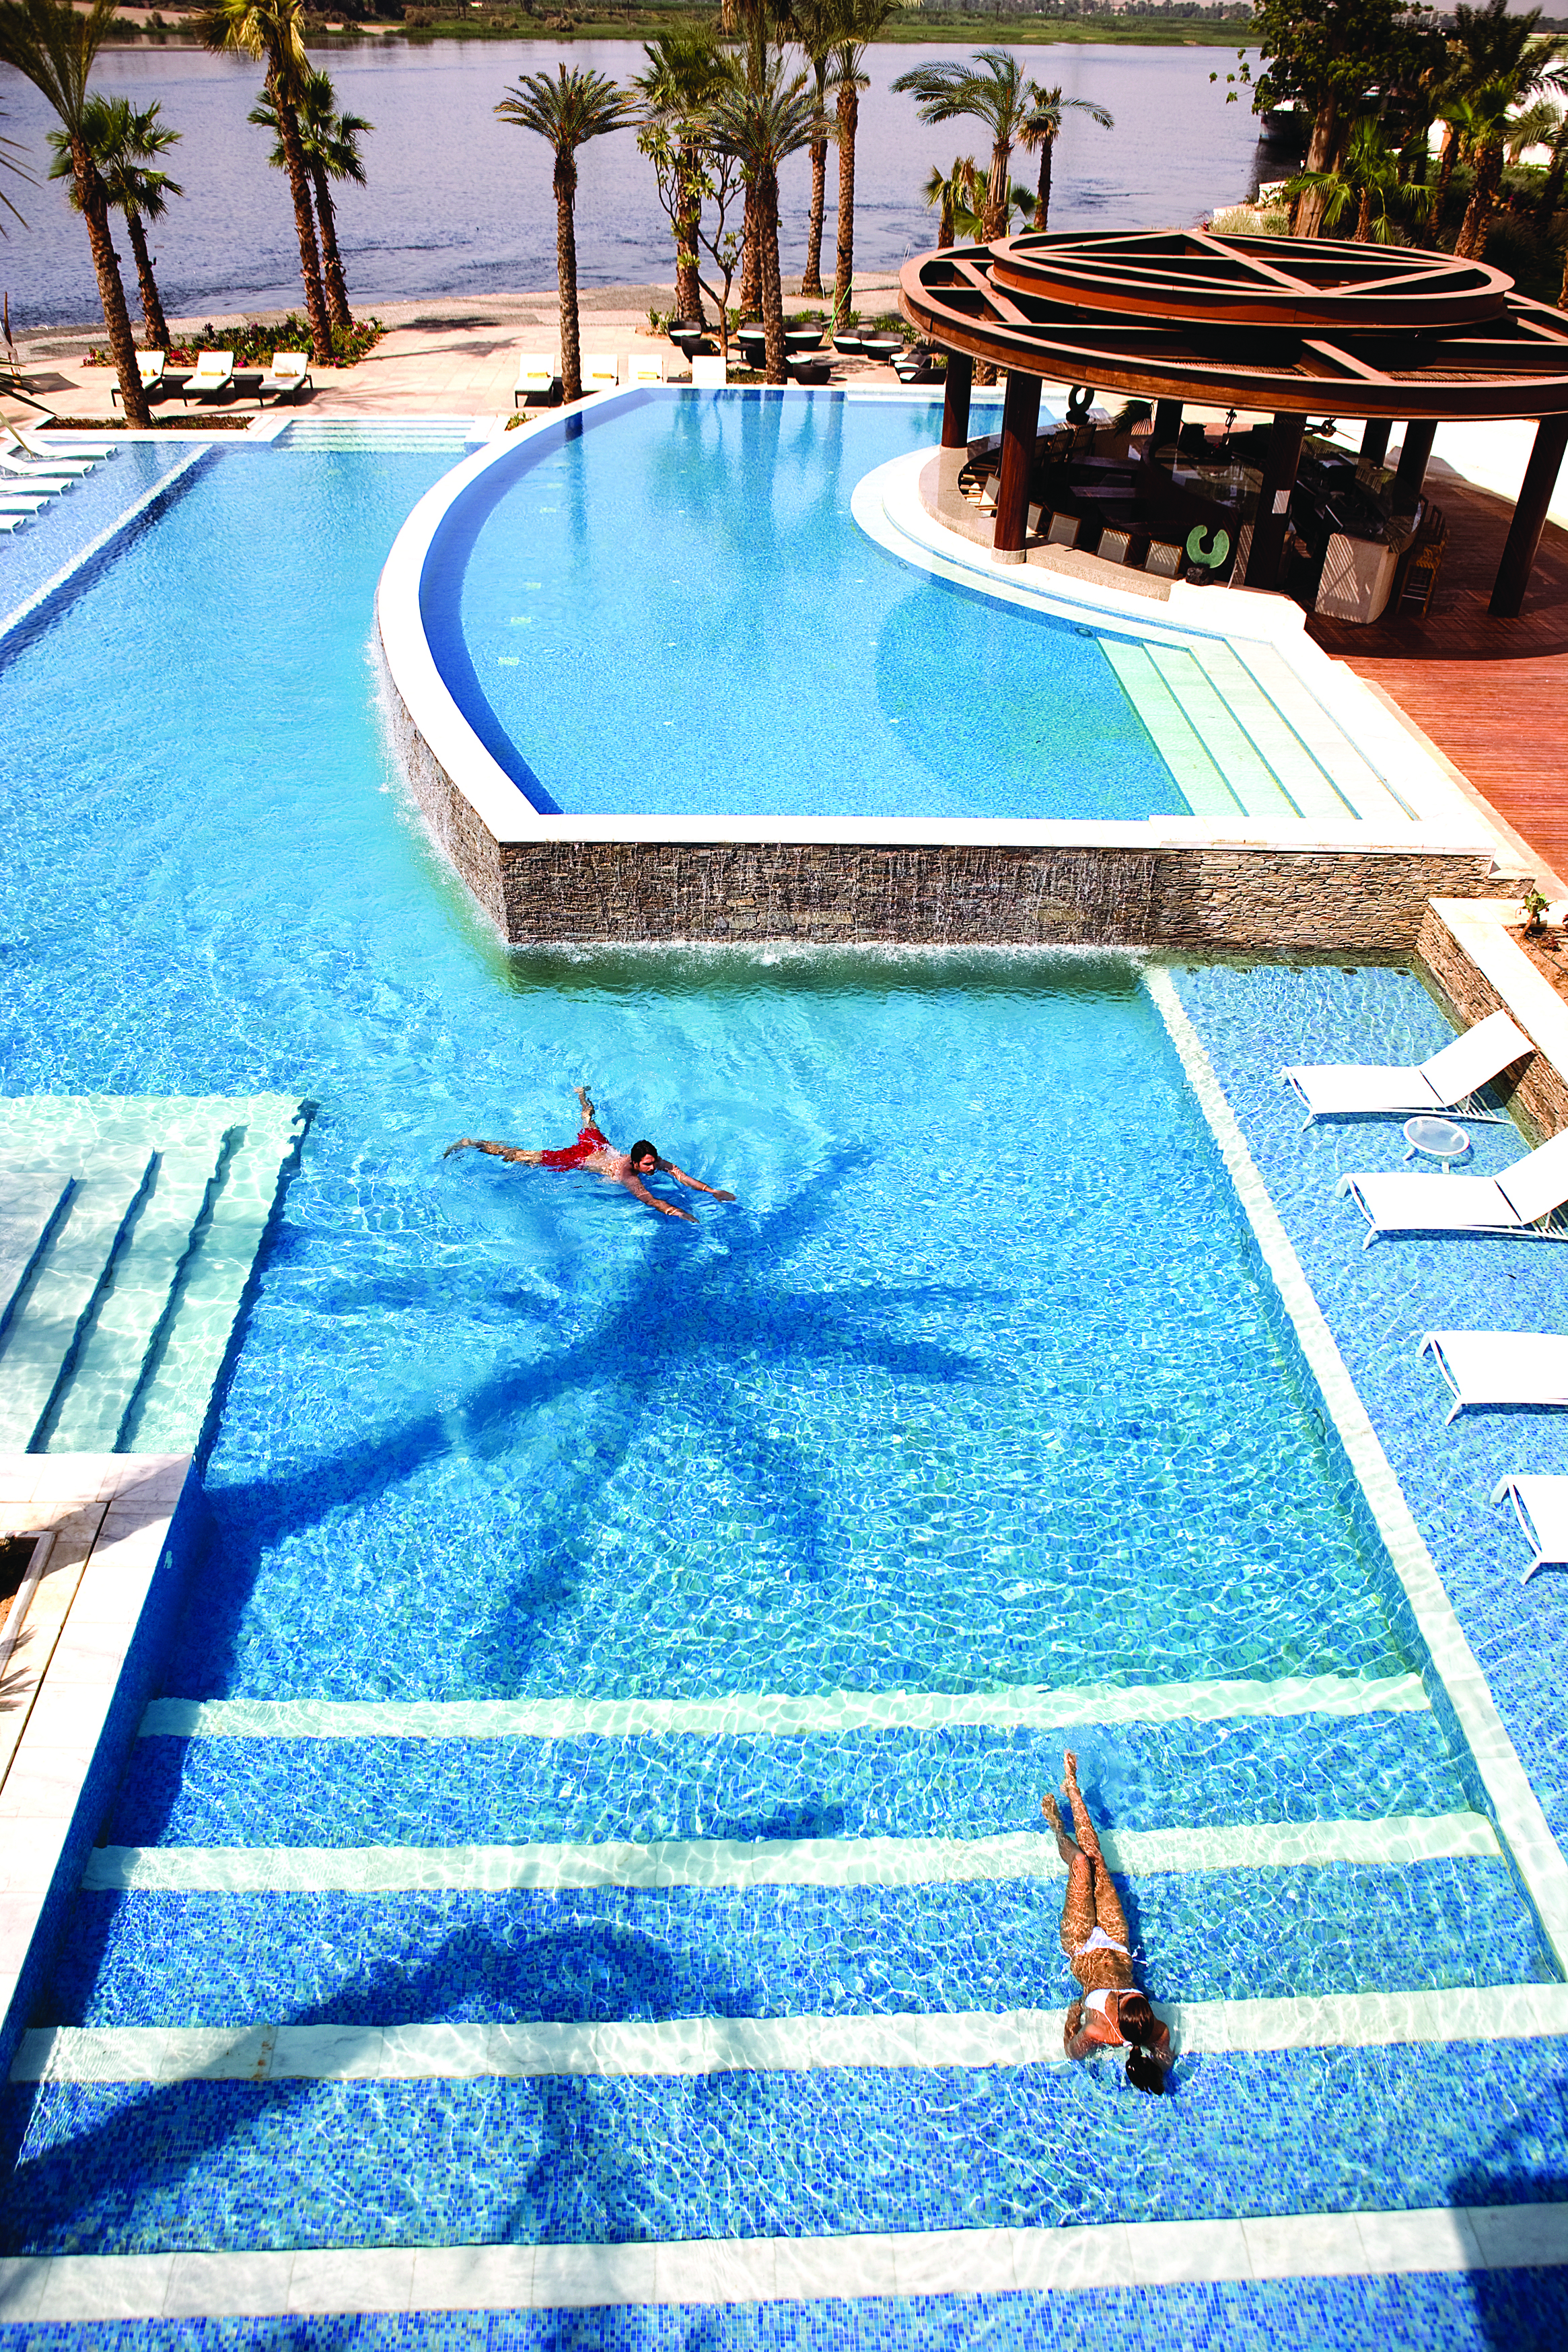 People Swimming in the Main Pool